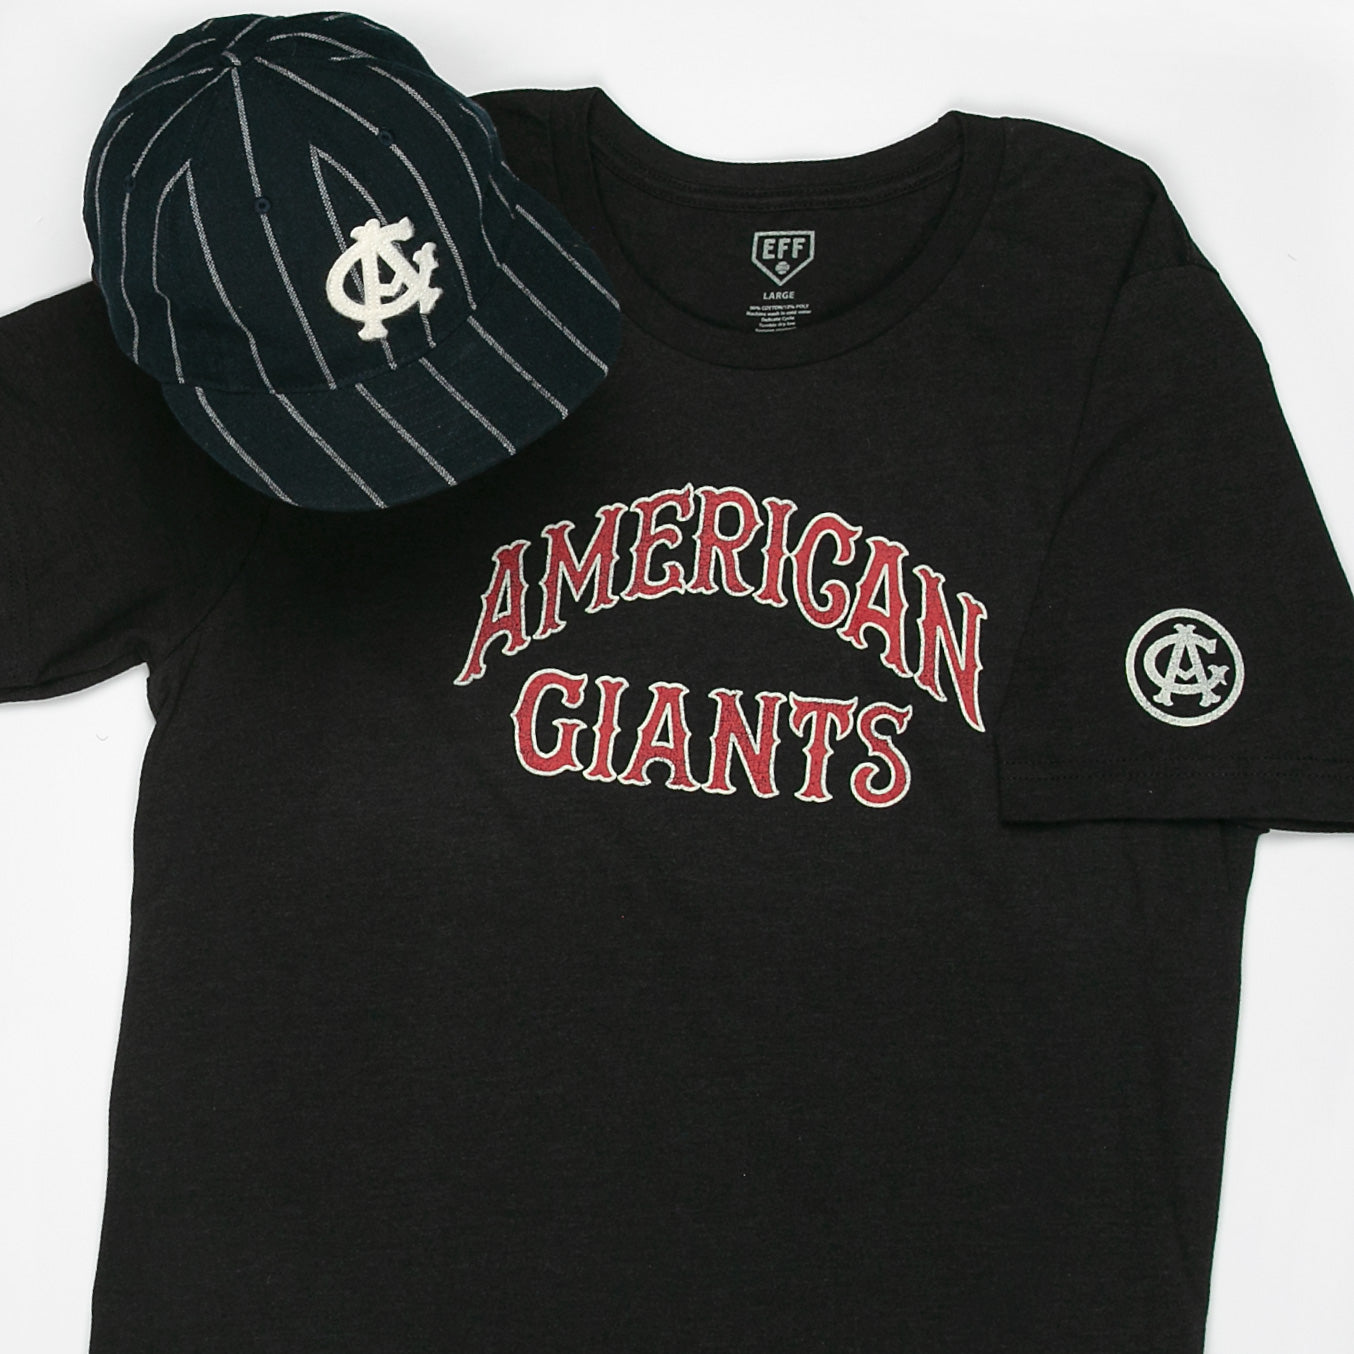 Chicago American Giants T-Shirt